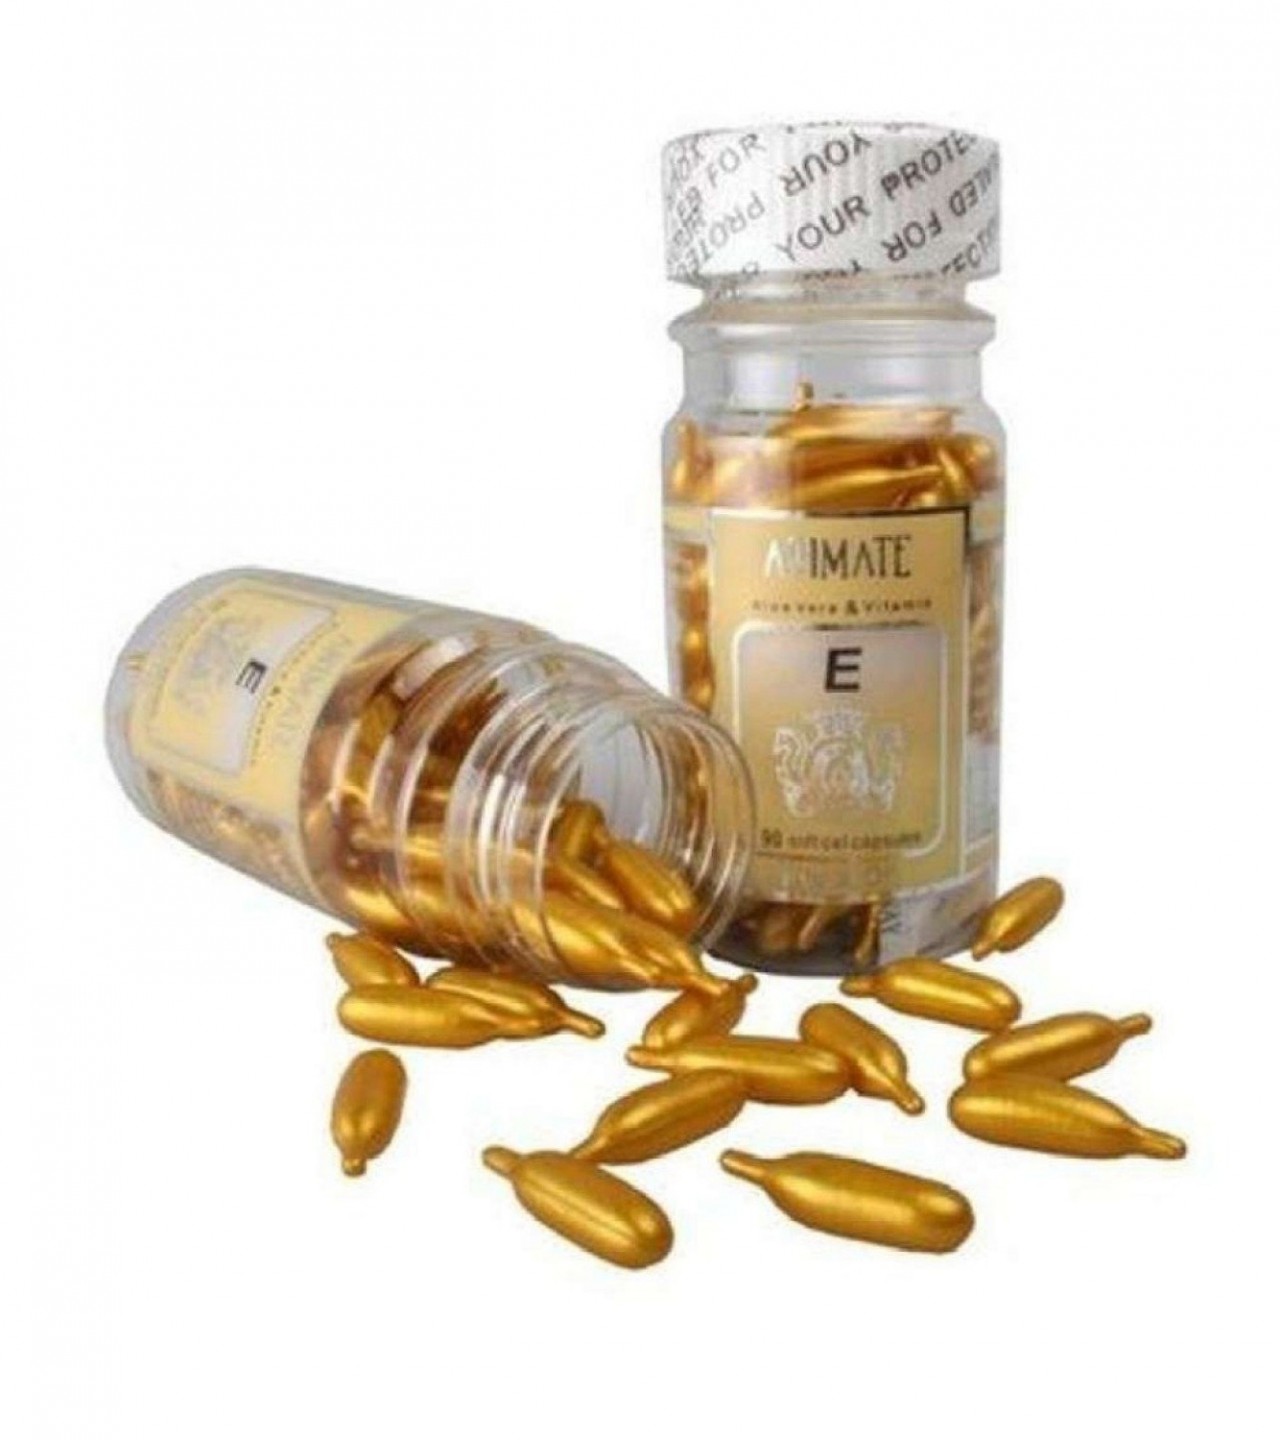 Vitamin E Skin Care Capsules - 100 Capsules